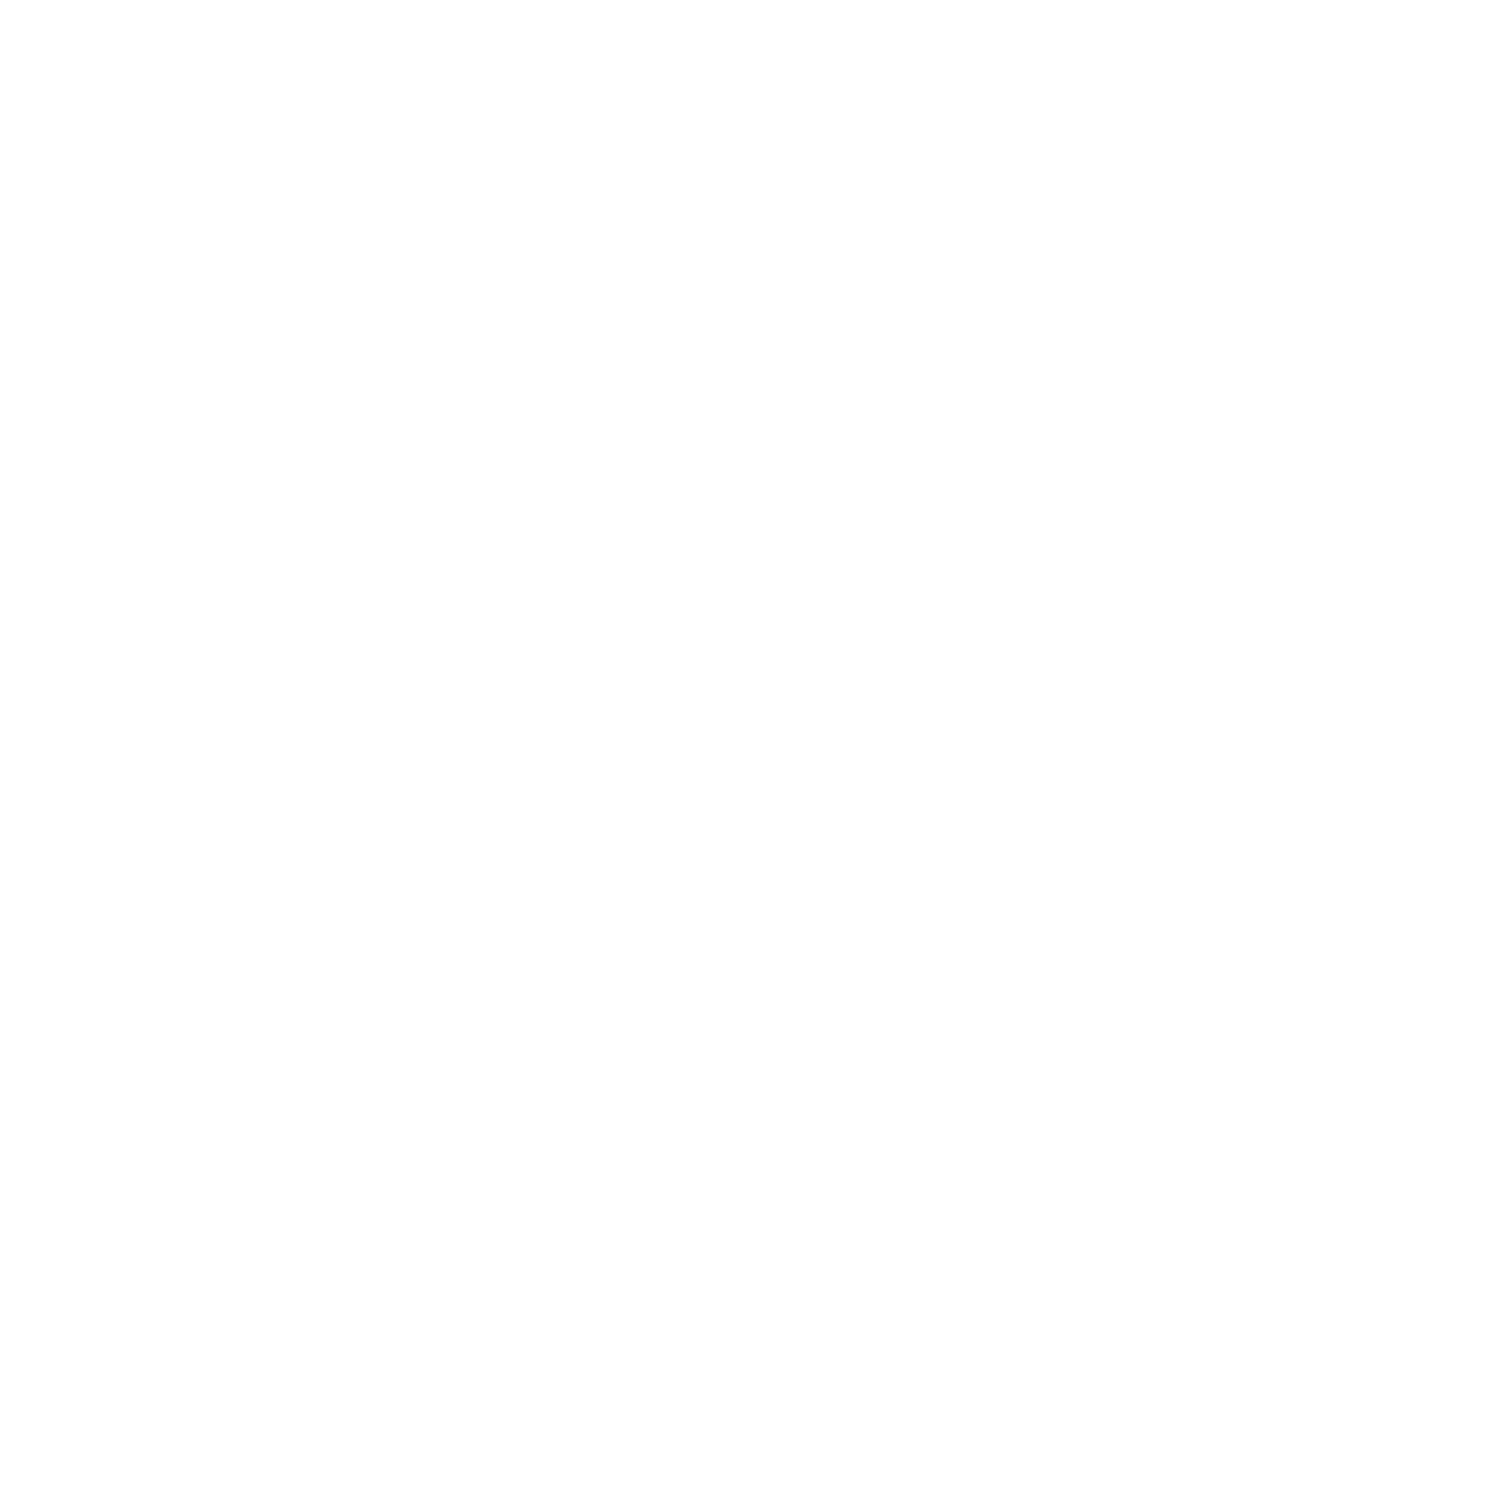 The Distinctive Building Group